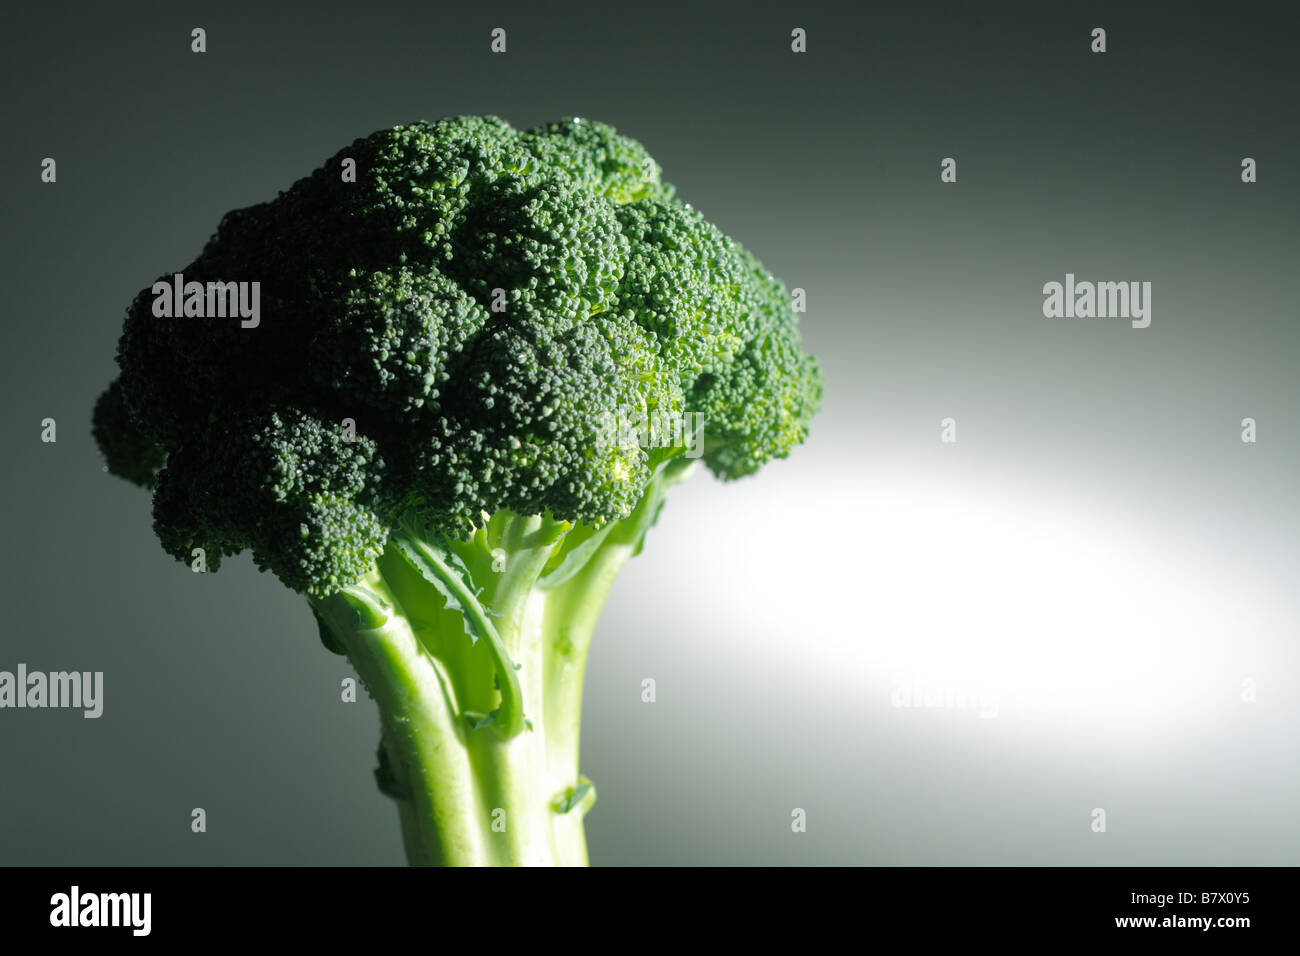 El brócoli, Foto de estudio Foto de stock